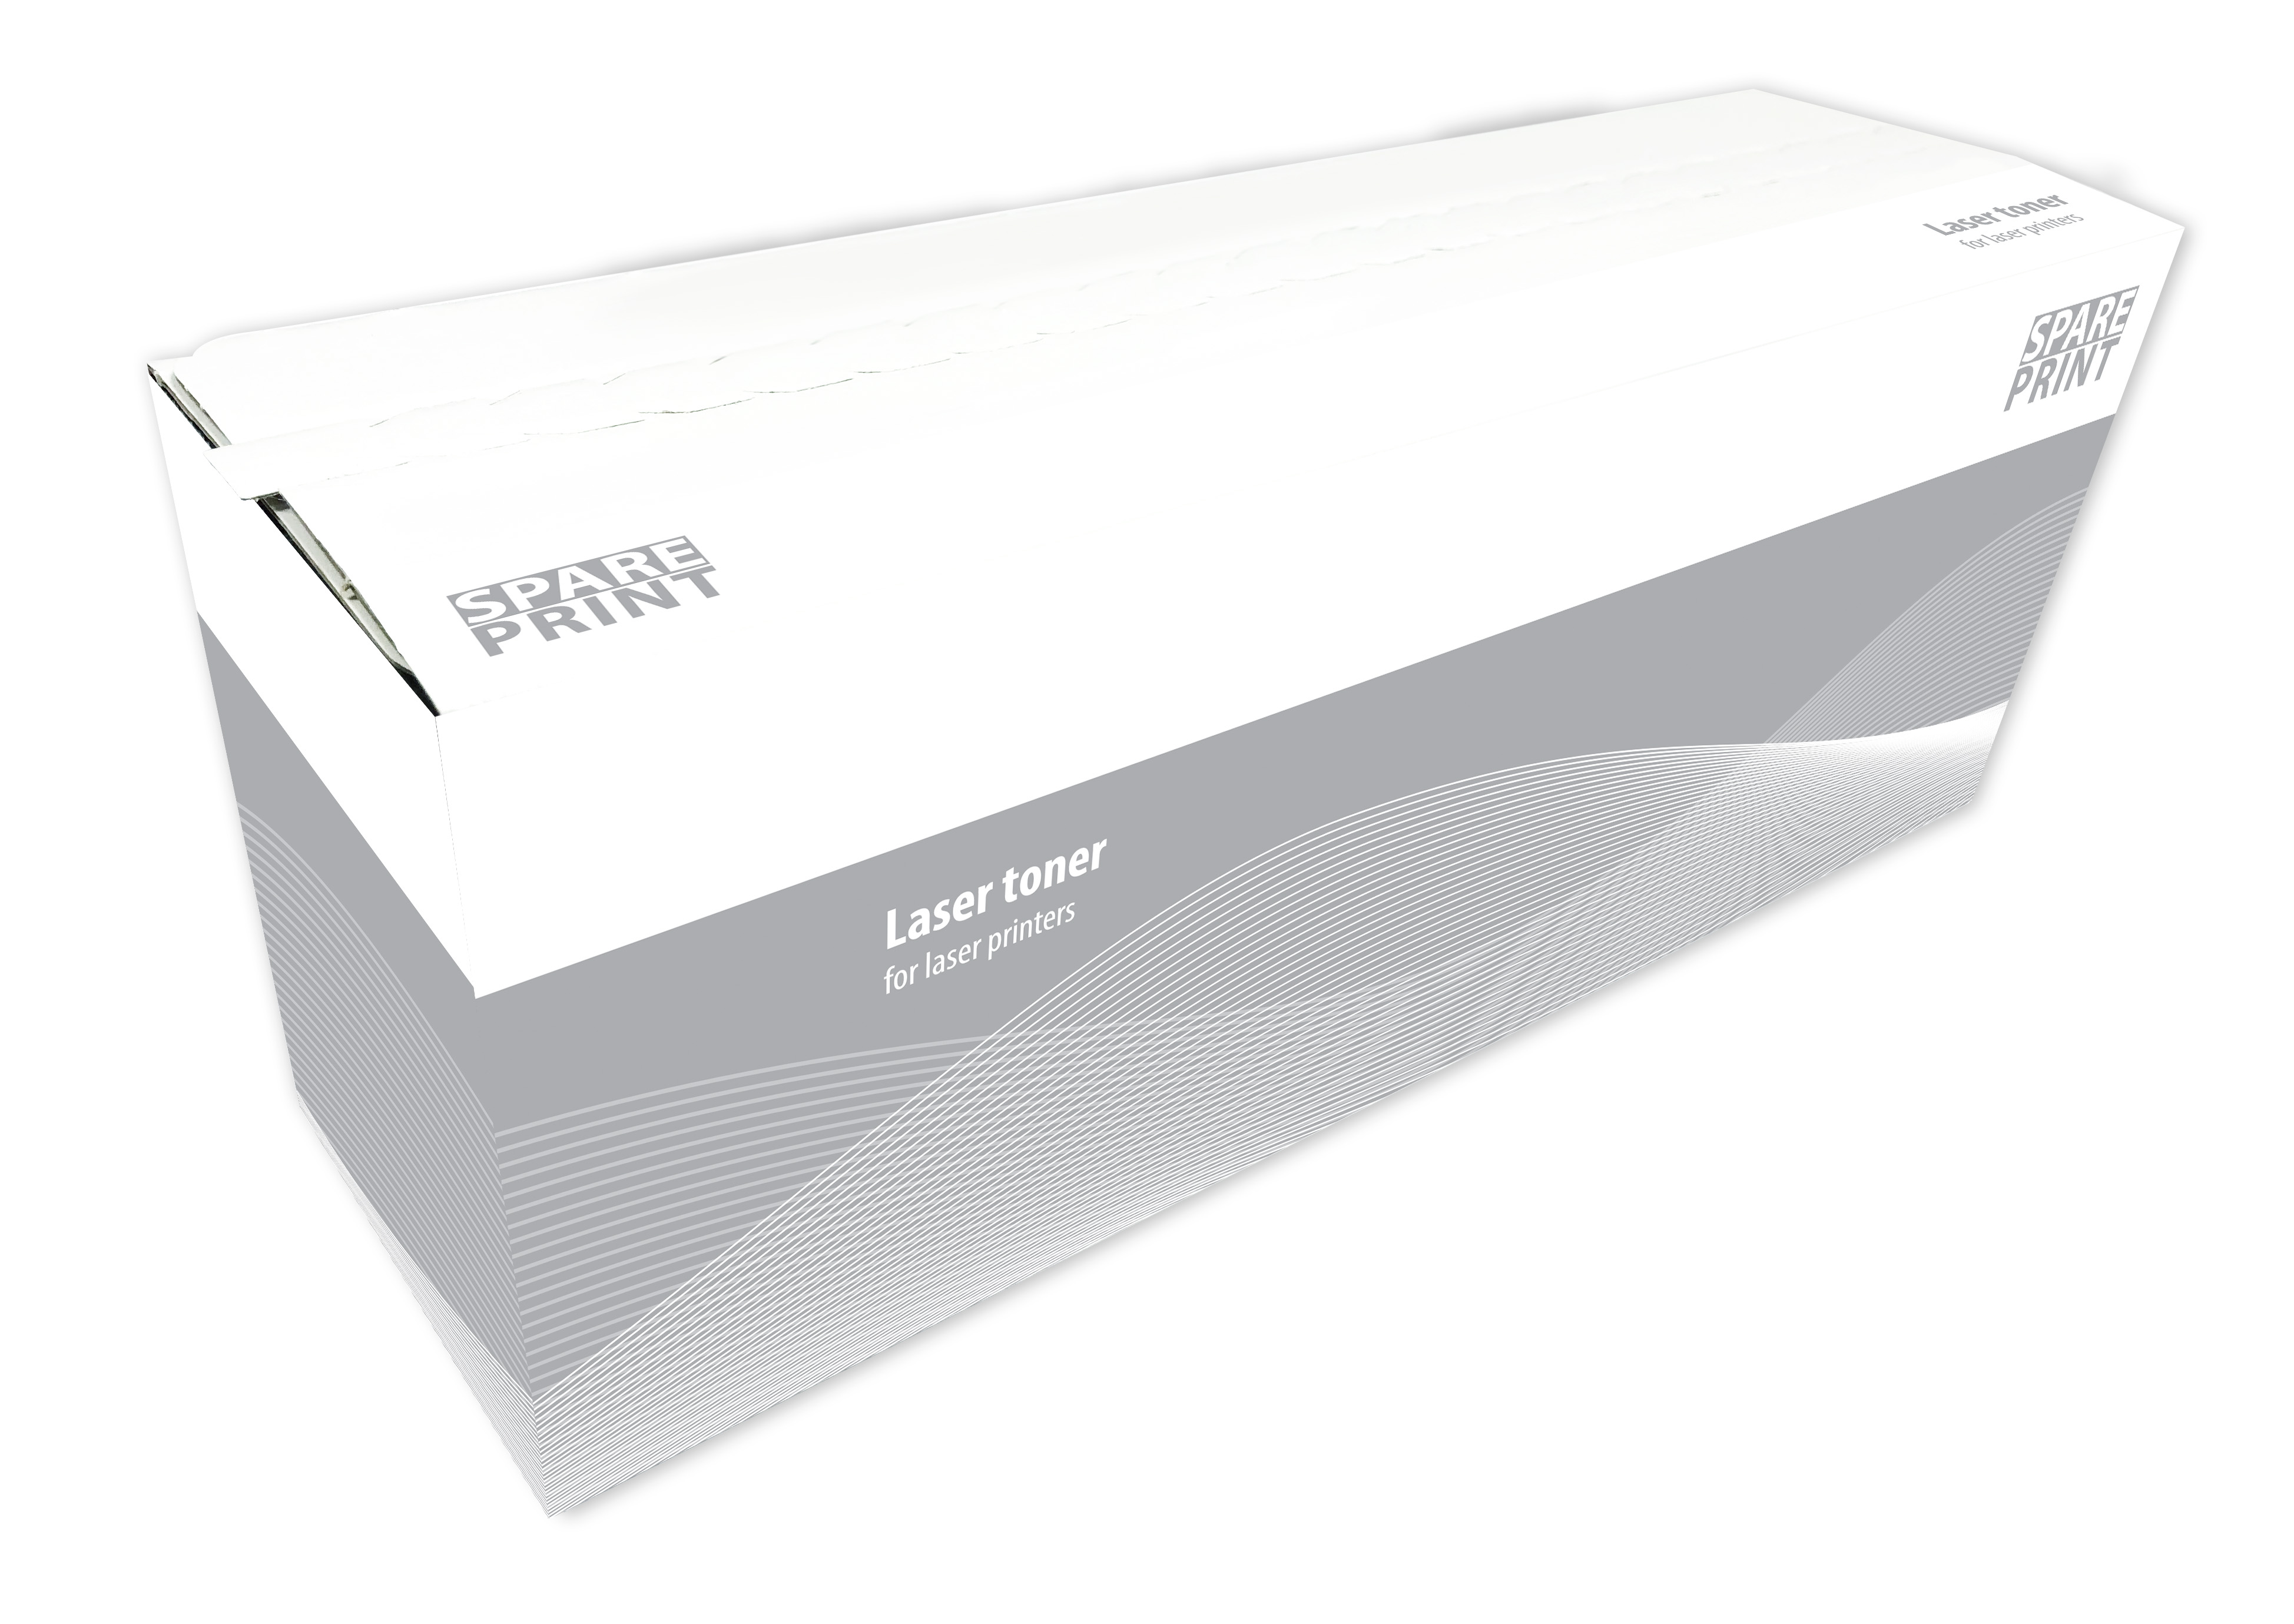 SPARE PRINT kompatibilní toner 106R01634 Black pro tiskárny Xerox